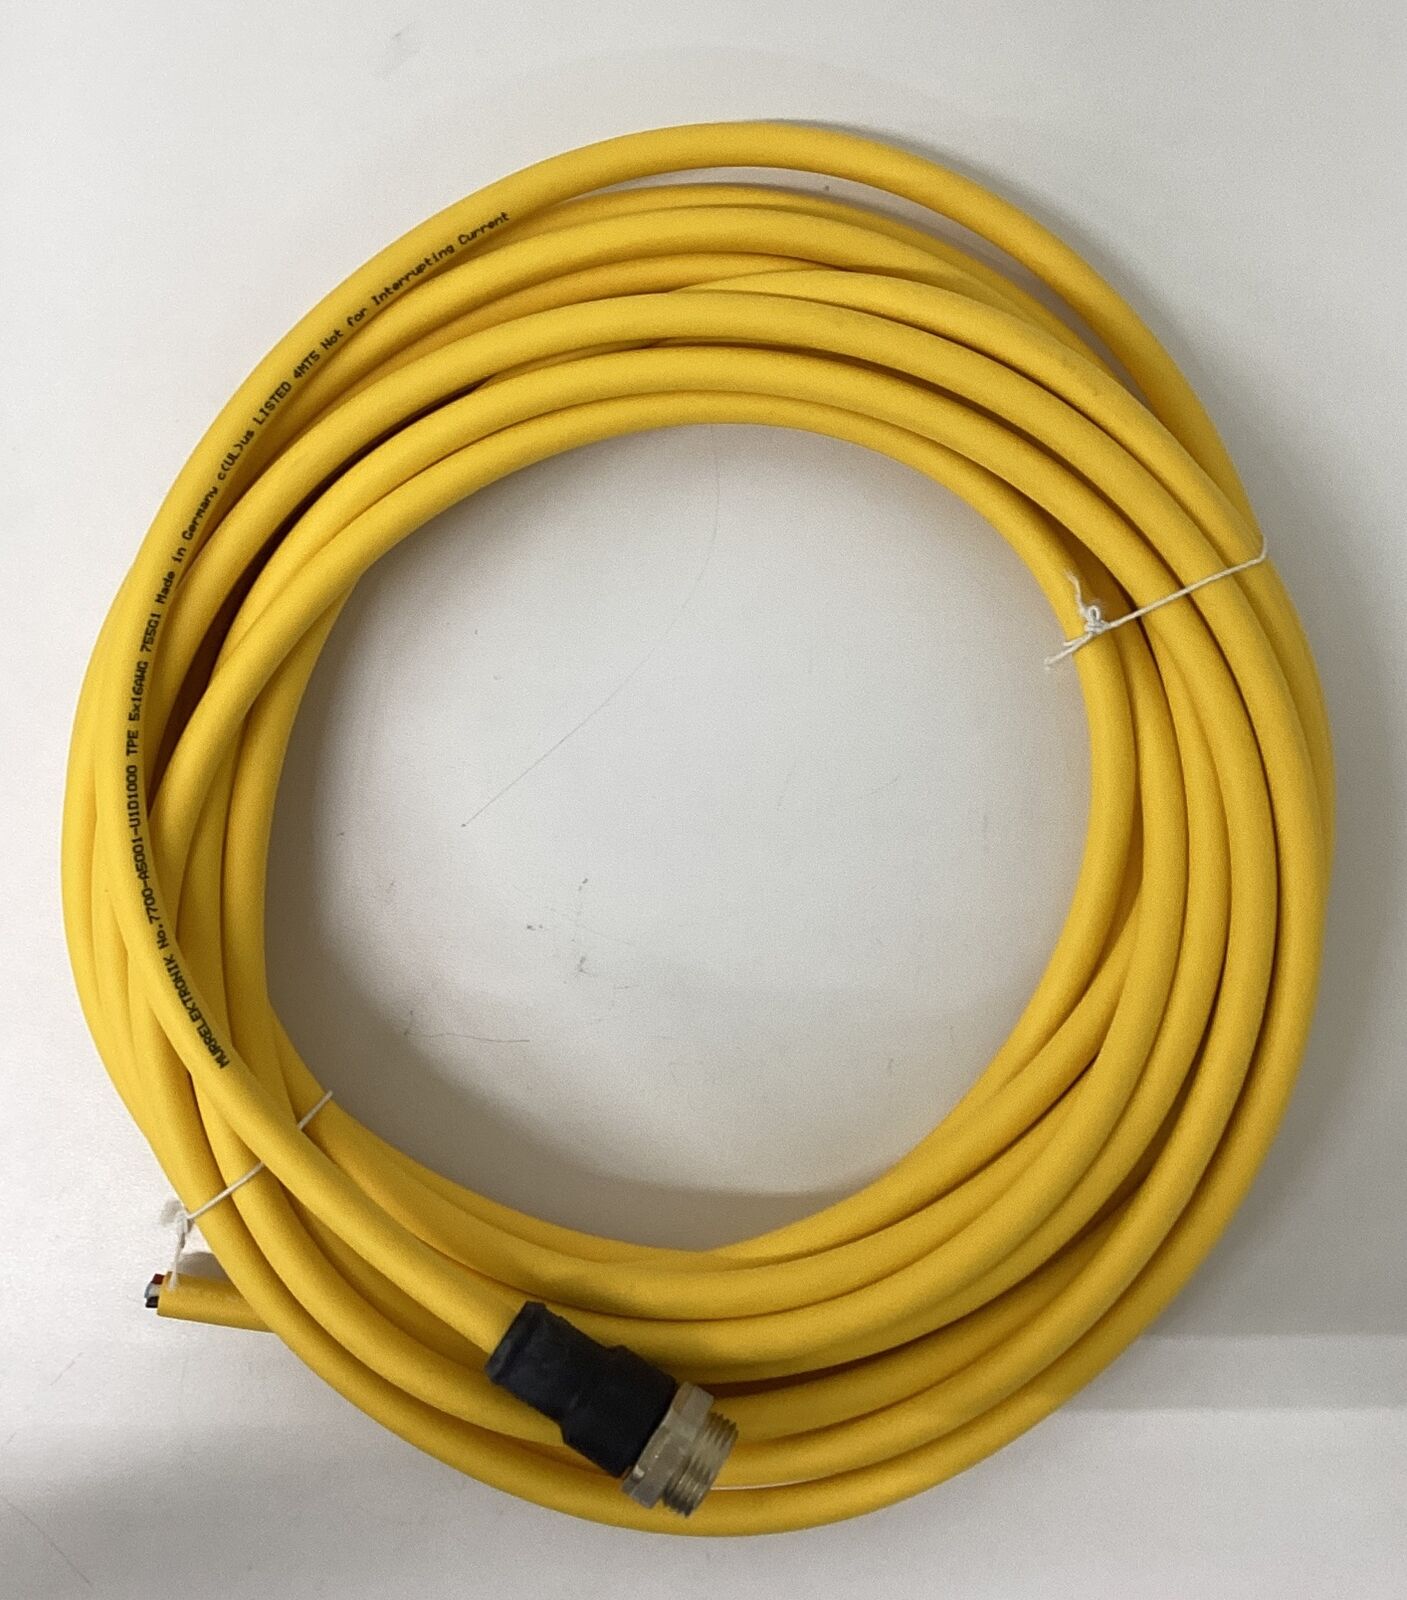 Murr 7700-A5001-U1D1000 Mini 7/8'' 5-Pole Male Cable 10 Meters (CBL140)